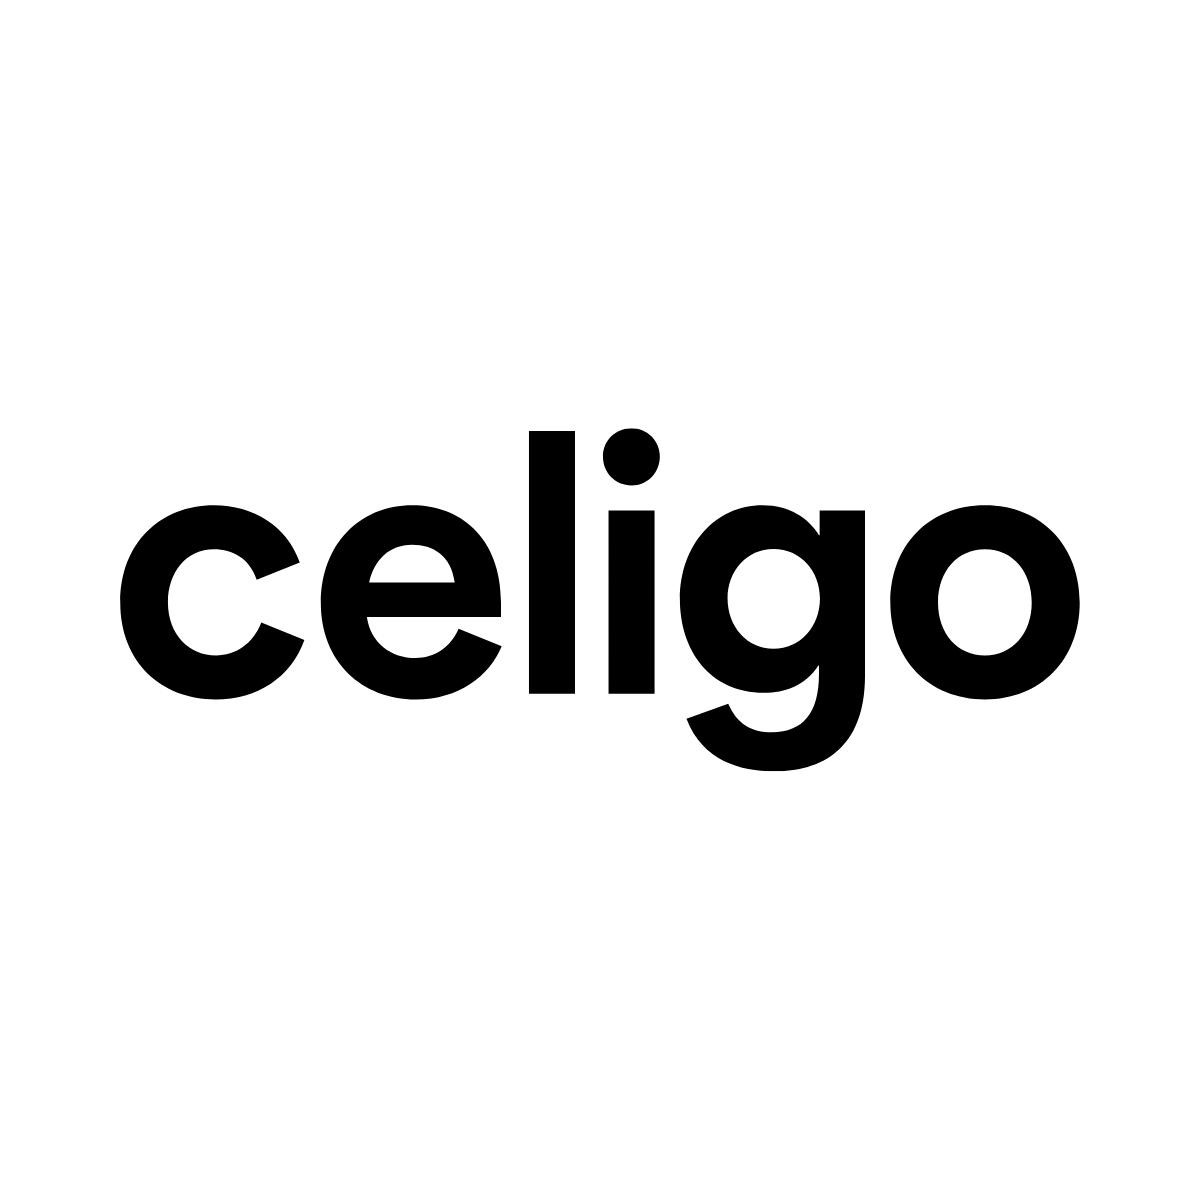 Celigo: Simplifying How Businesses Integrate, Automate, And Optimize Processes dlvr.it/T7B5Jv